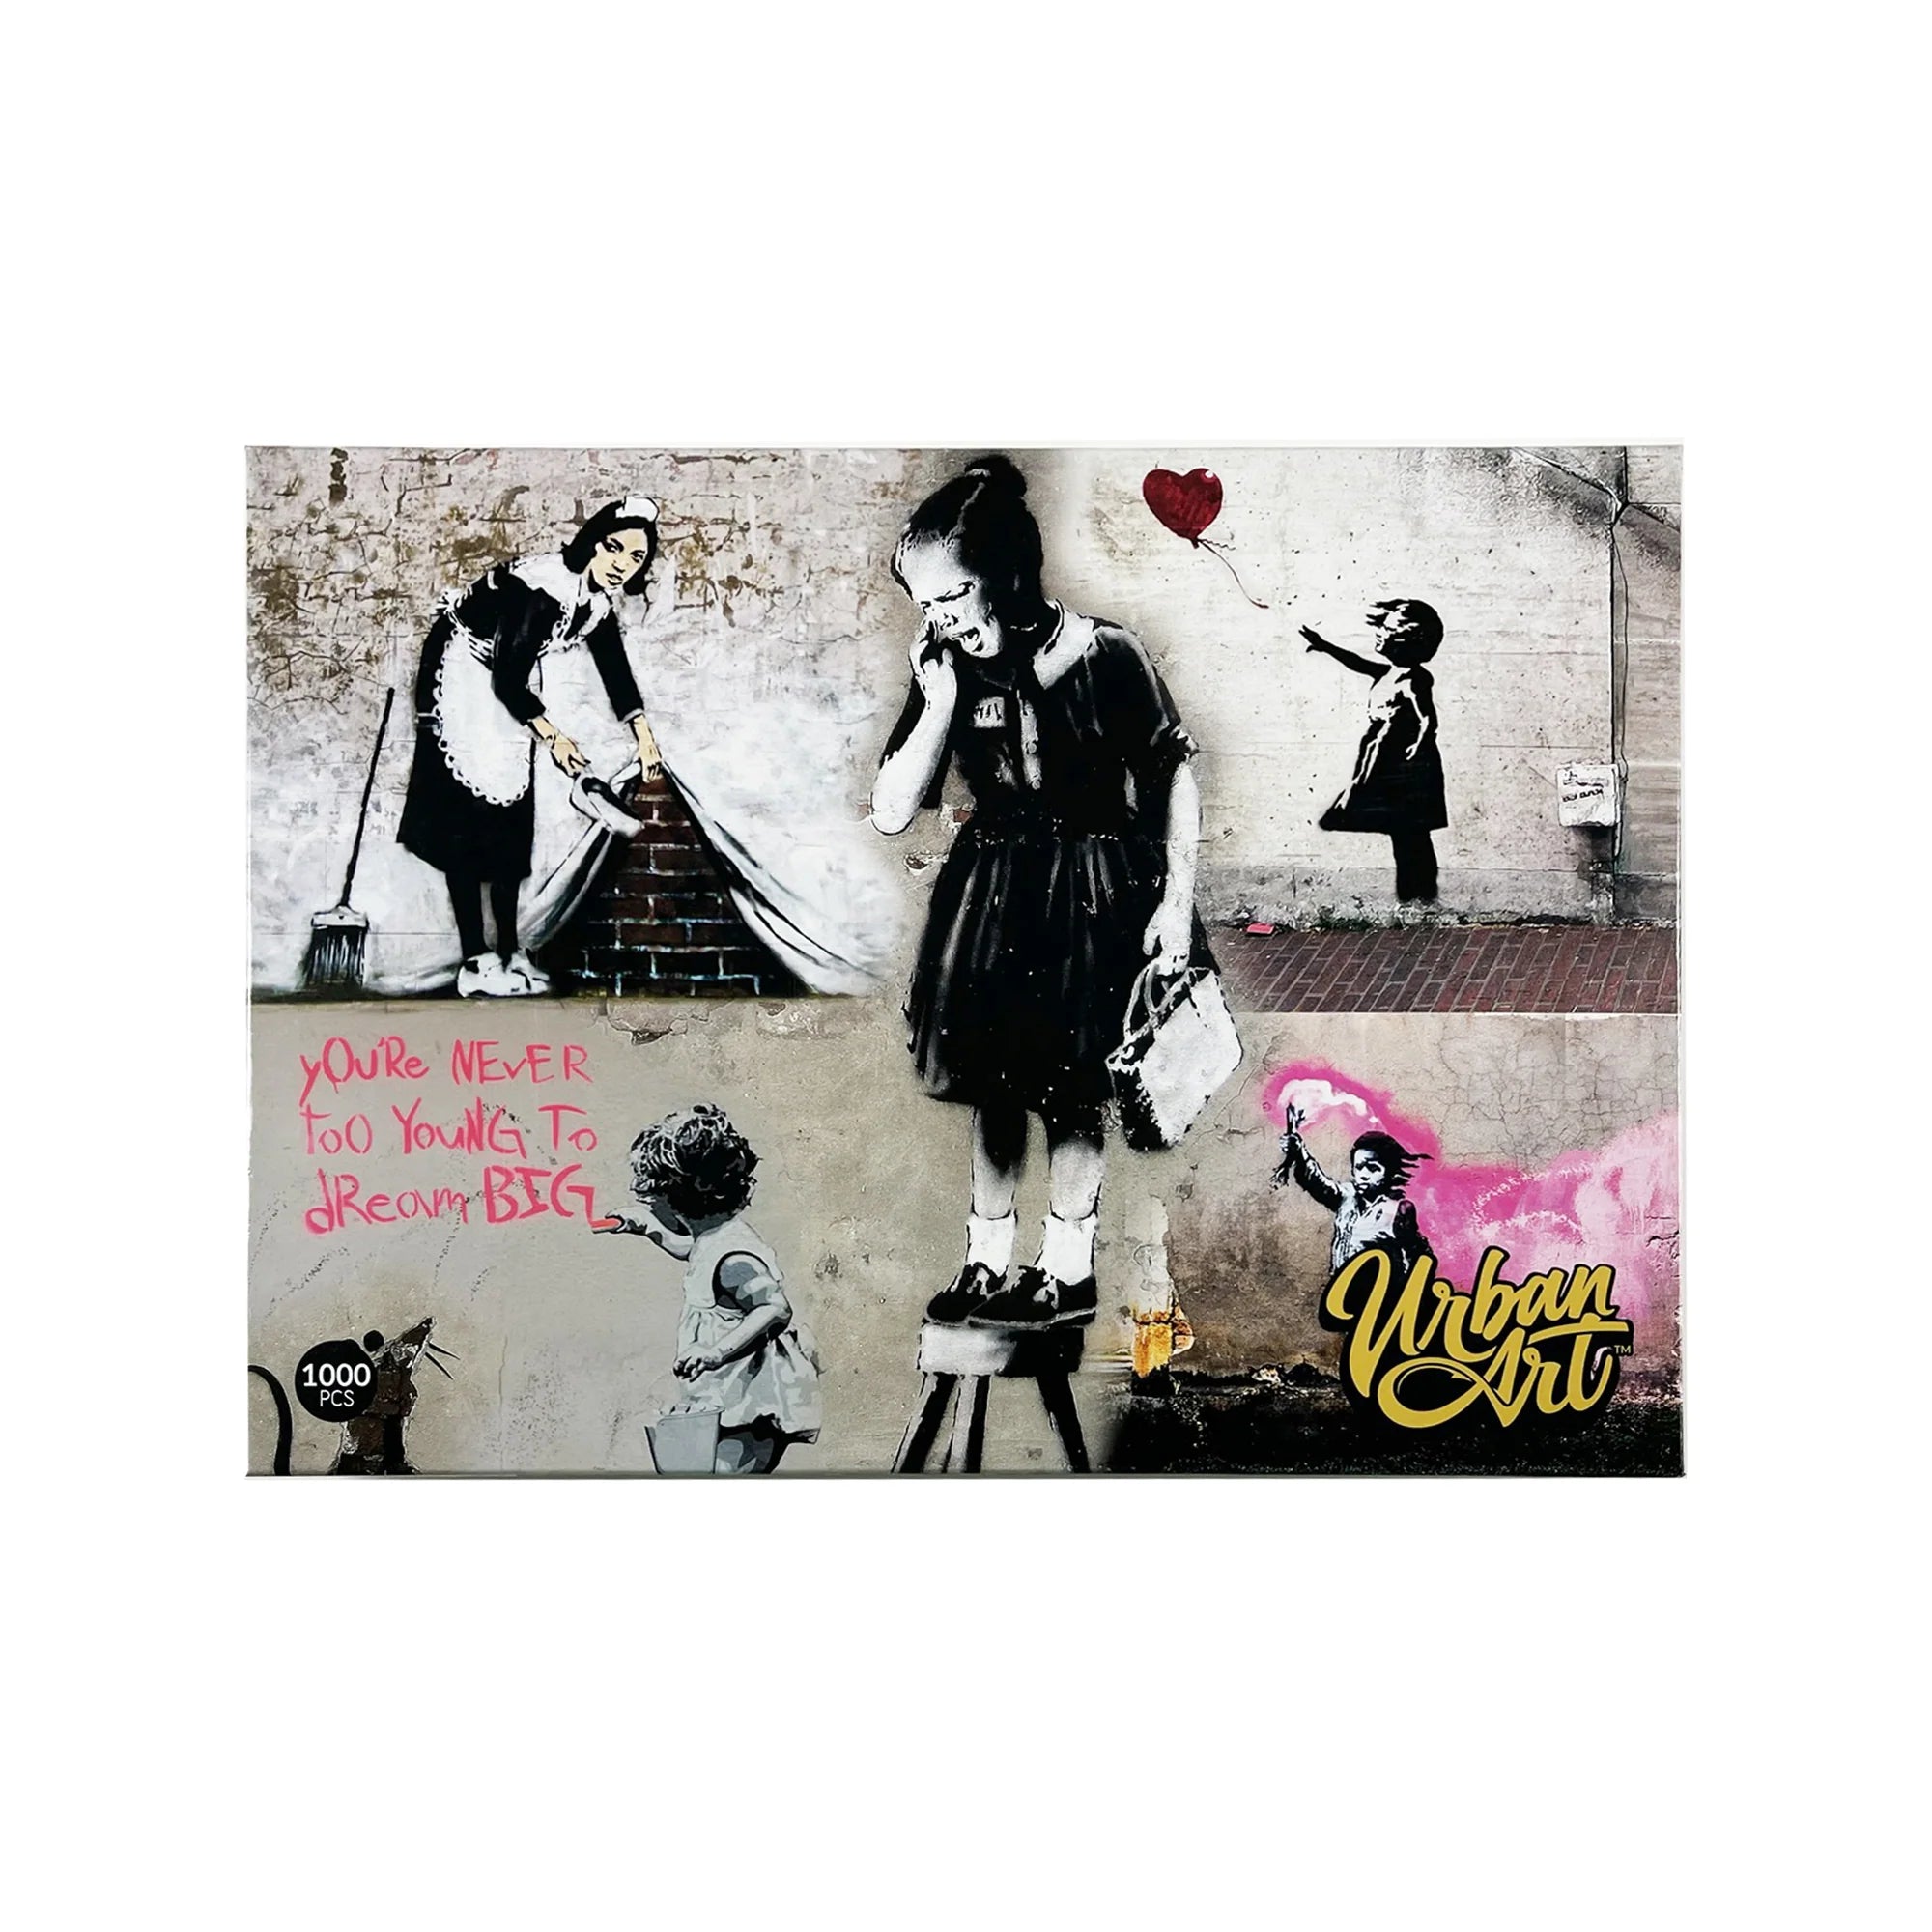 Urban Art: Banksy Girl on a Stool